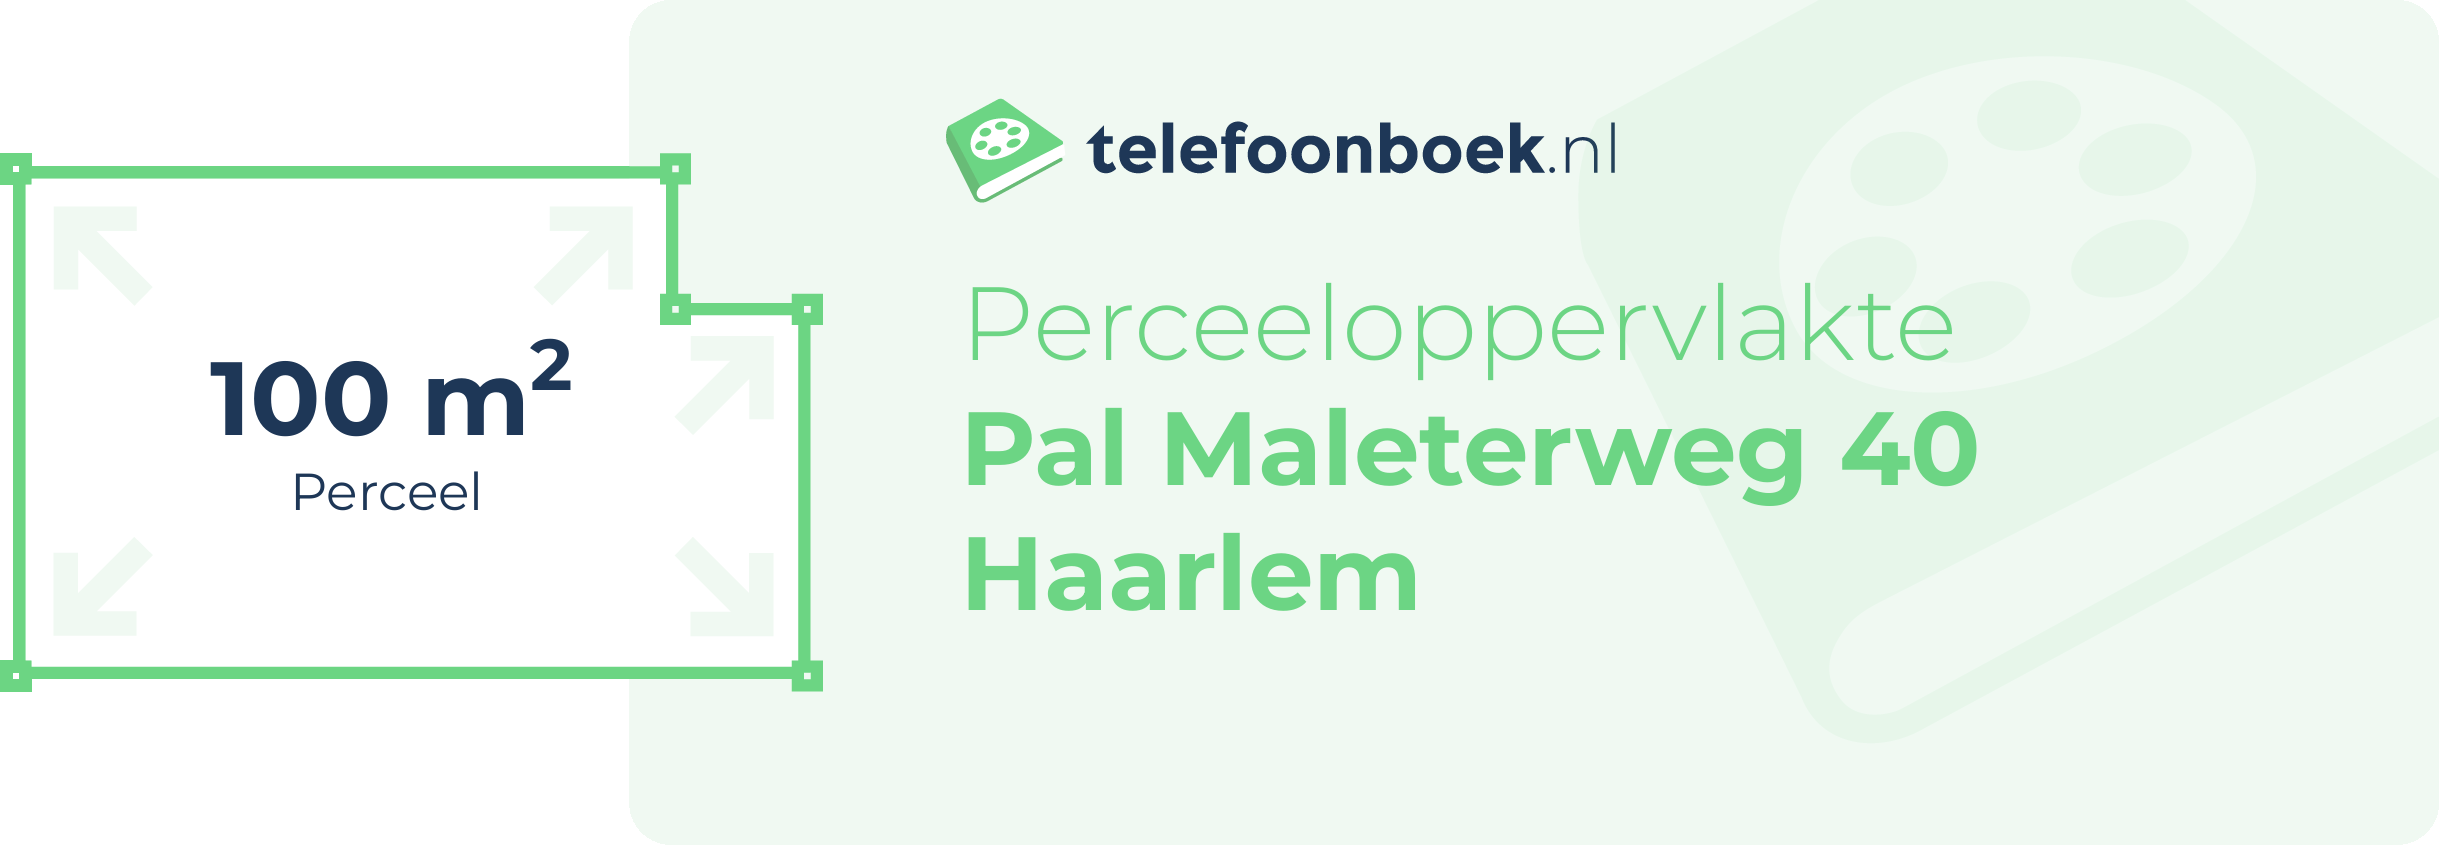 Perceeloppervlakte Pal Maleterweg 40 Haarlem